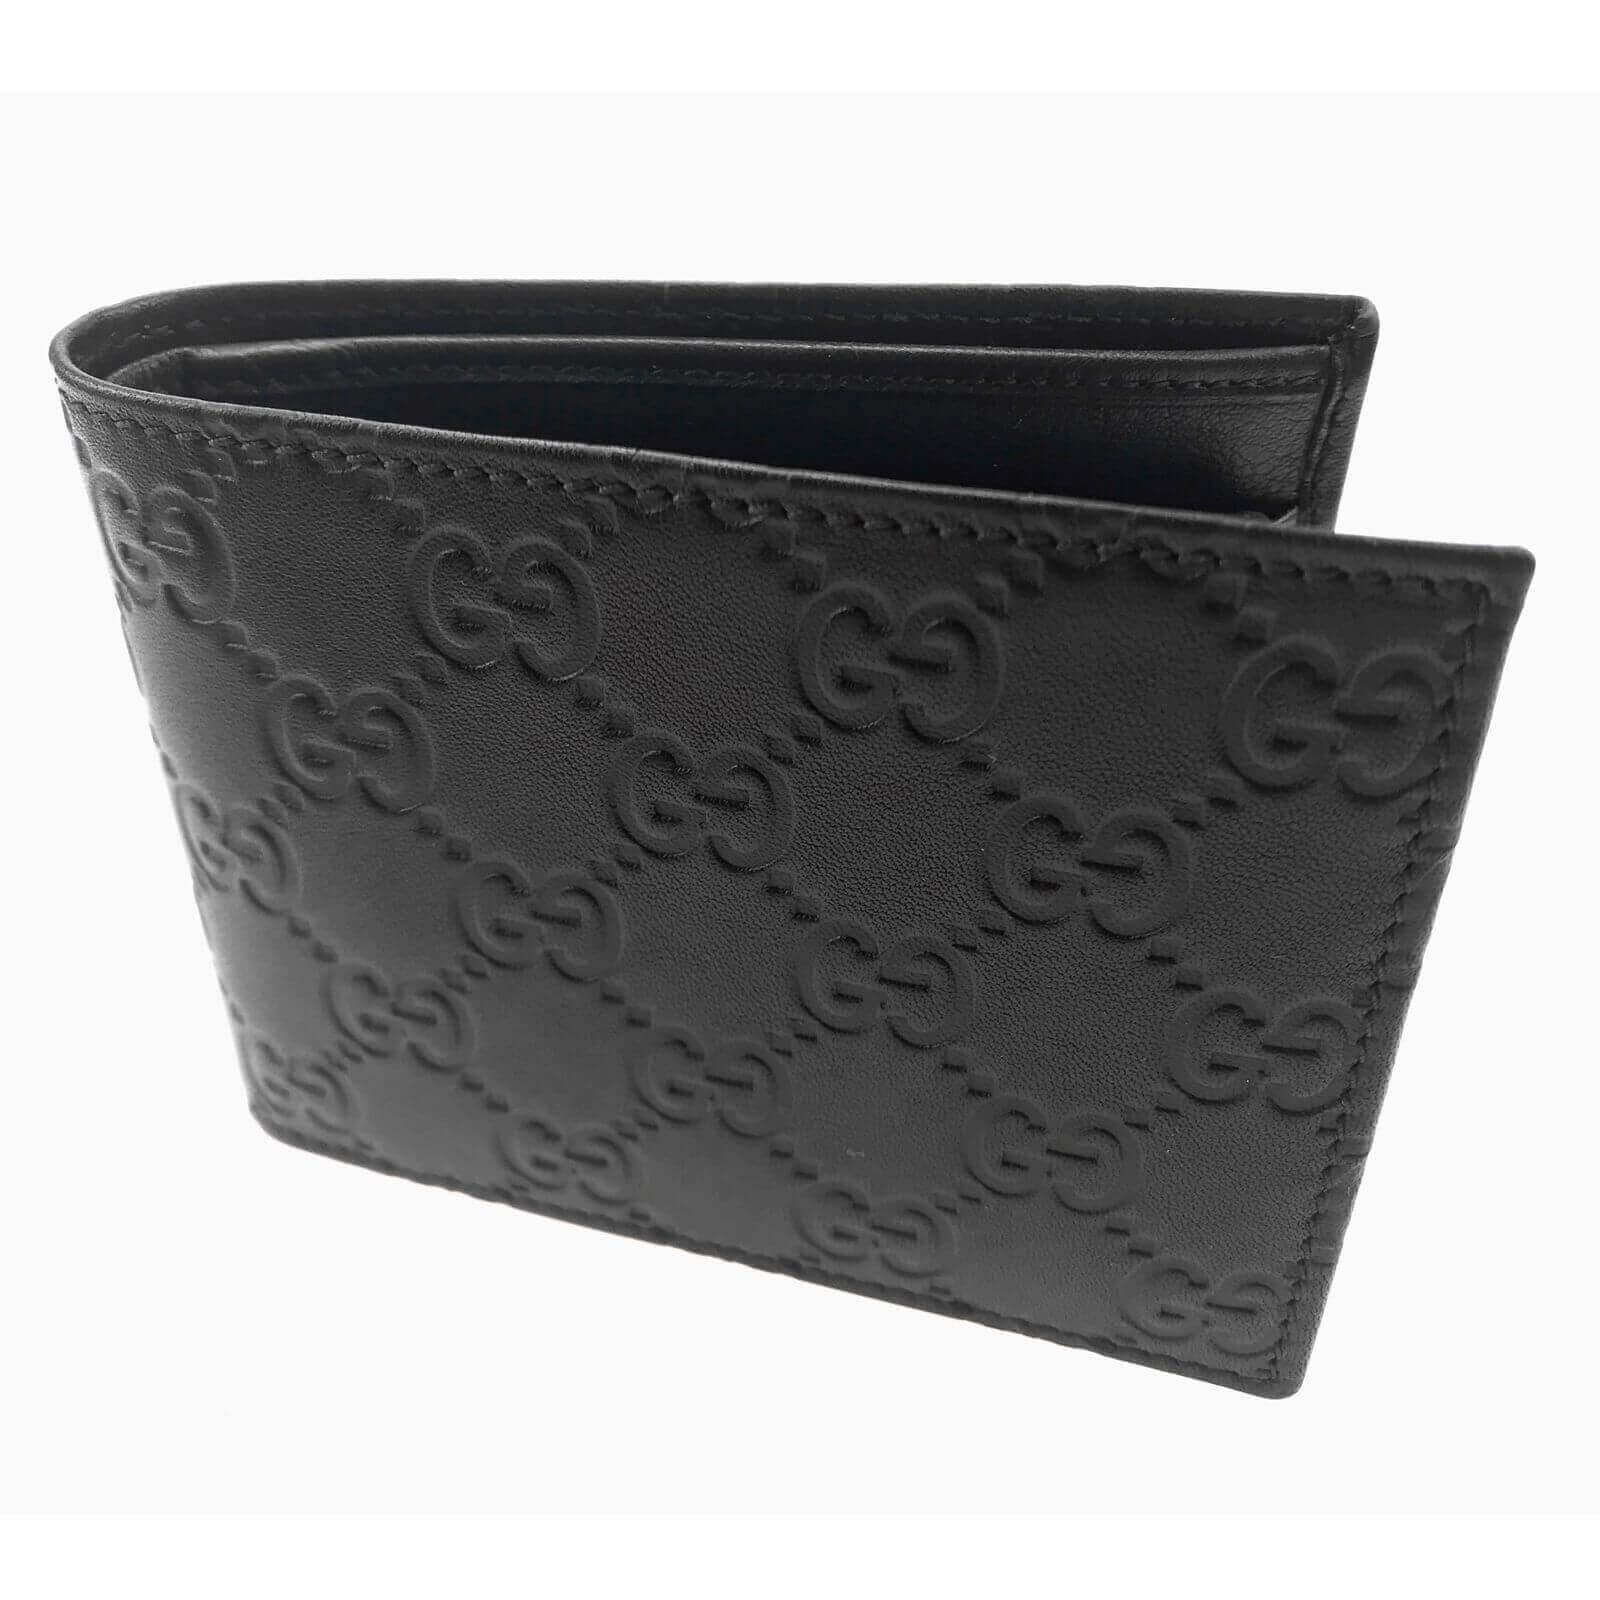 Imran Potato - Cool 'Gucci' Logo Embossed Bifold Wallet (Black) – eluXive